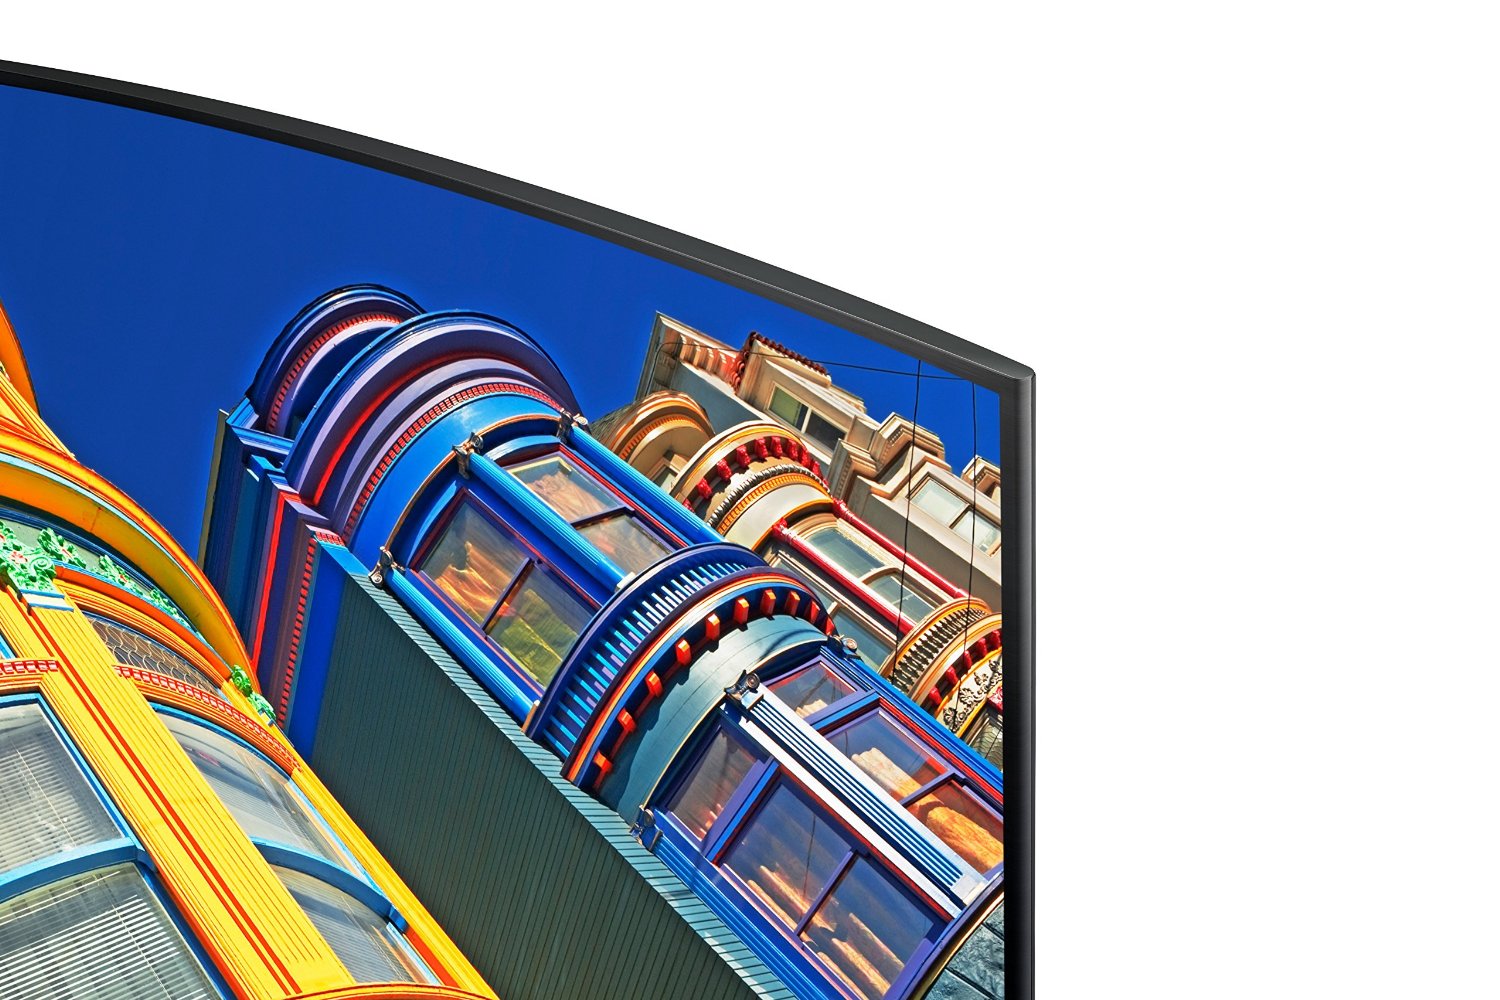 Samsung Un65ku6500 Curved 65 Inch 4k Ultra Hd Smart Led Tv 2016 Model N4 Free Image Download 9825